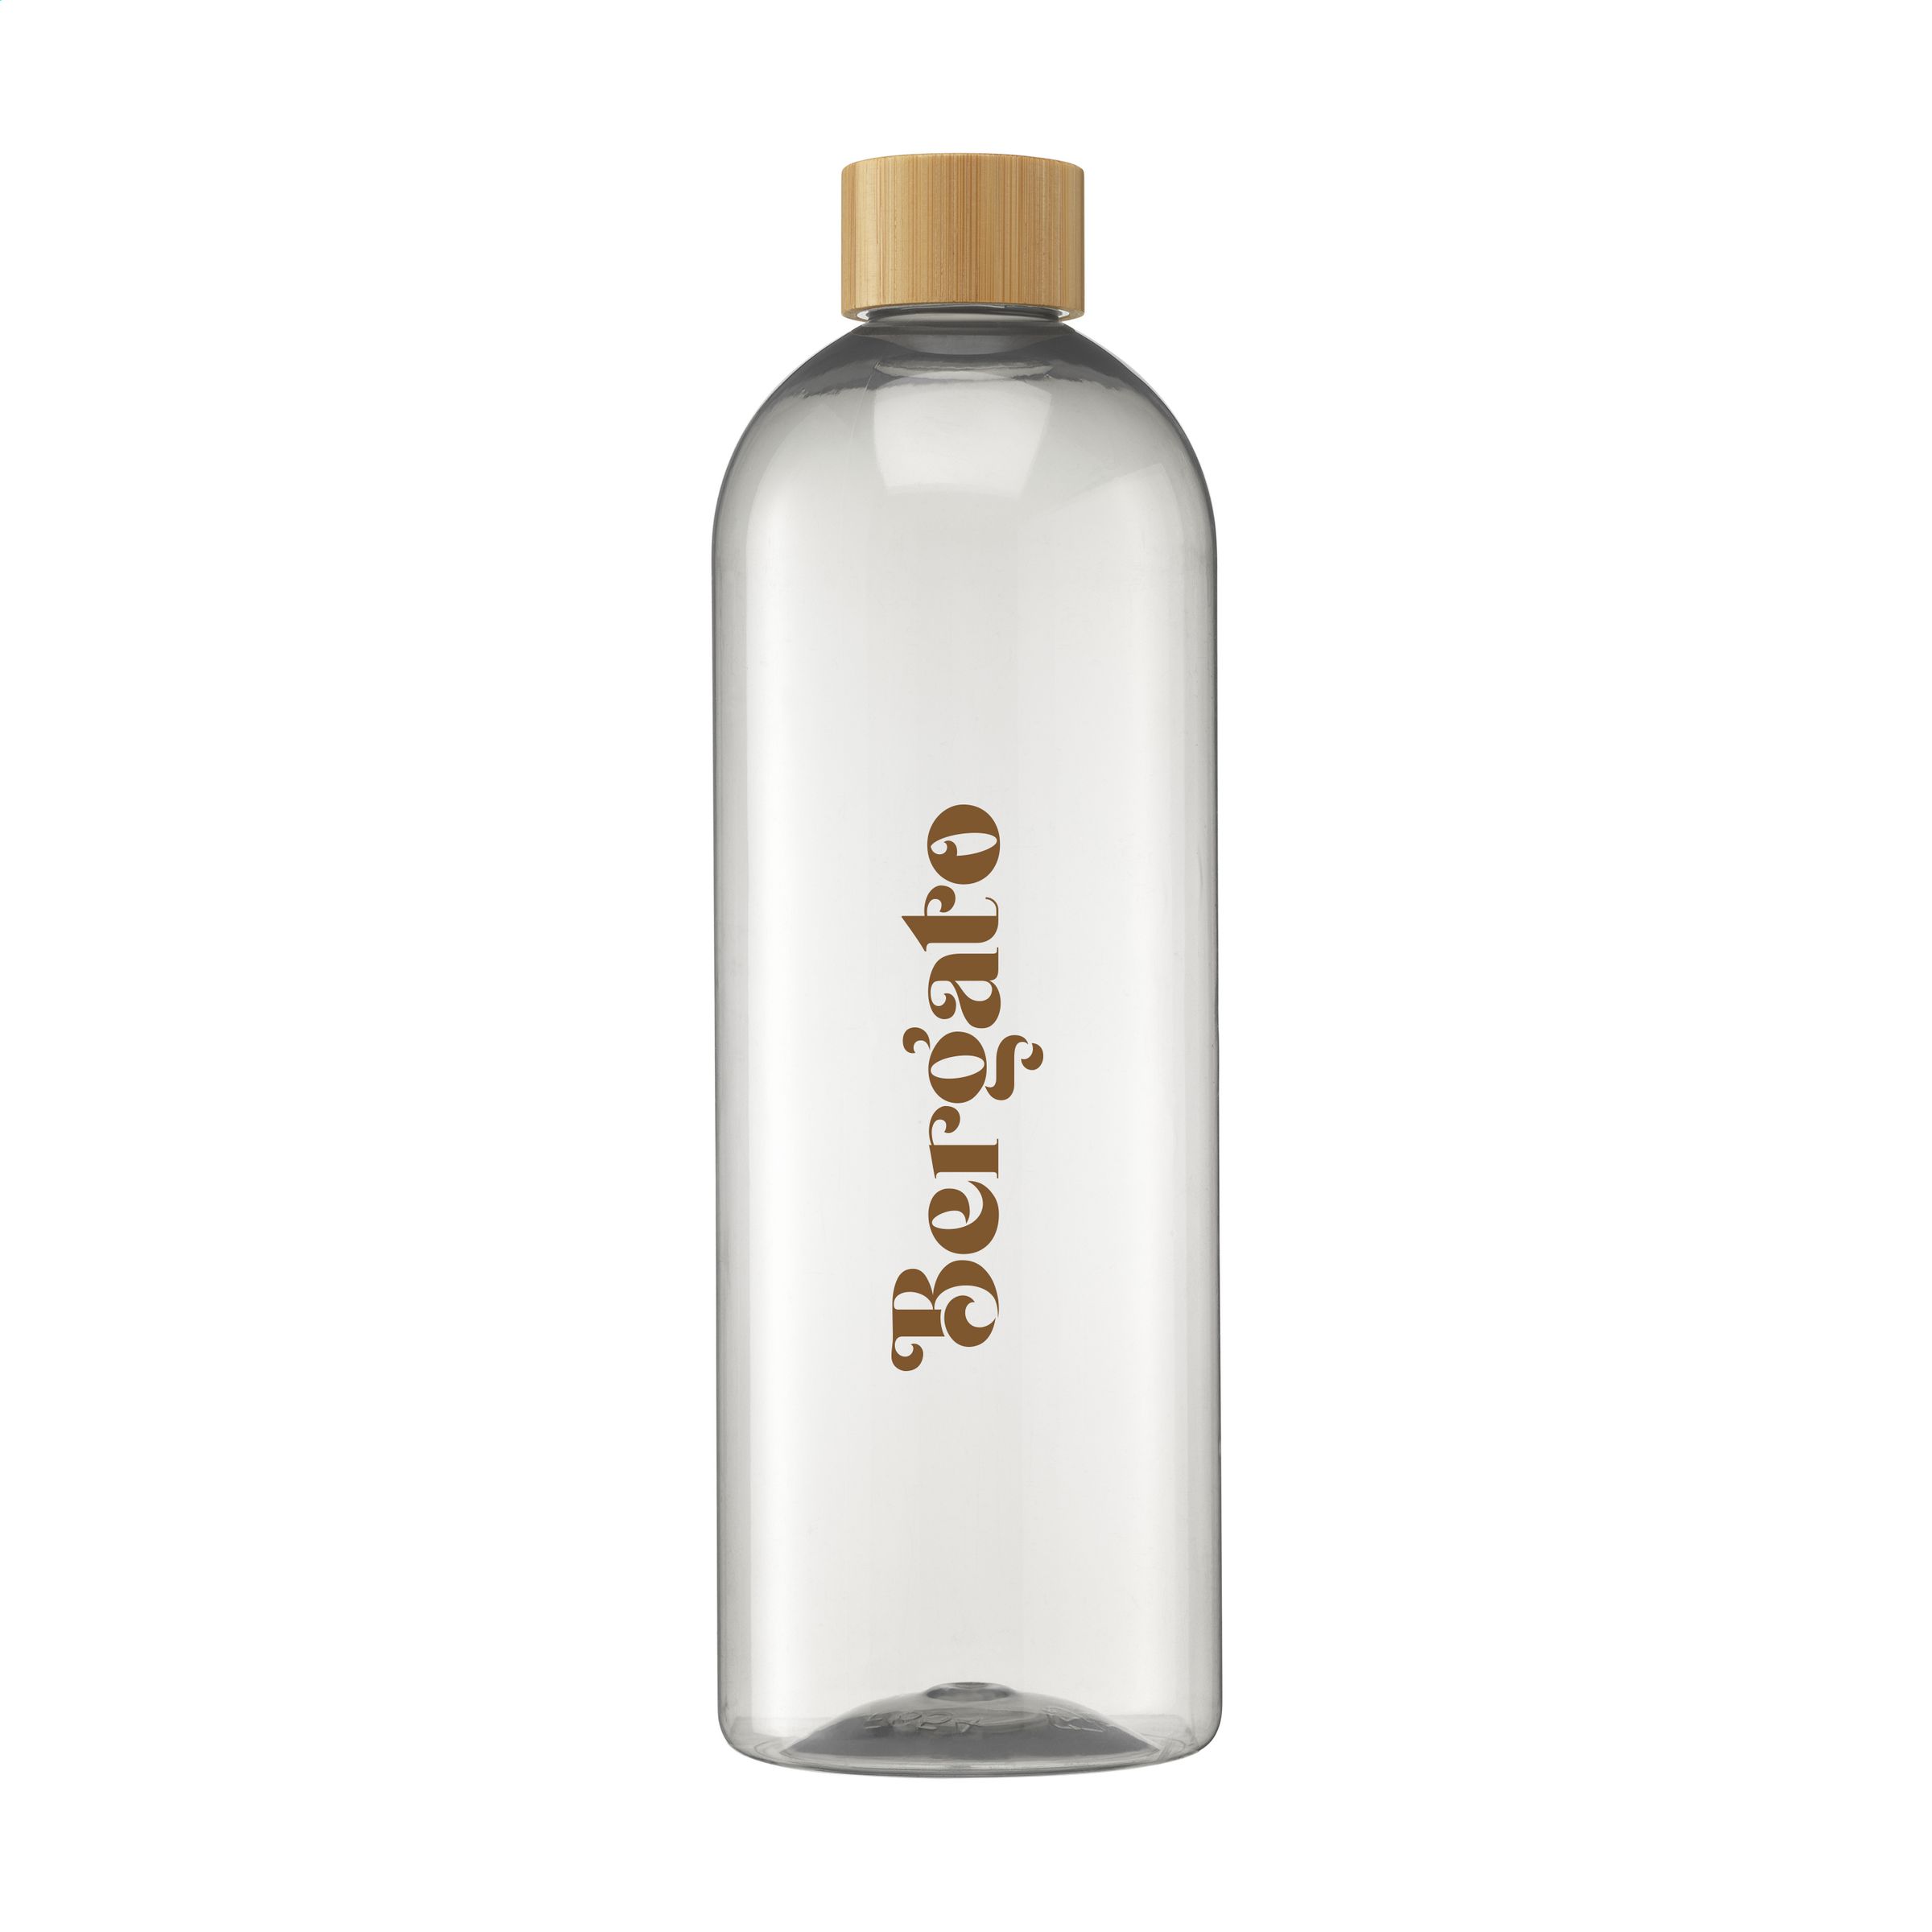 Drinking Bottle made of Recycled Polyethylene Terephthalate (RPET) - Waterside